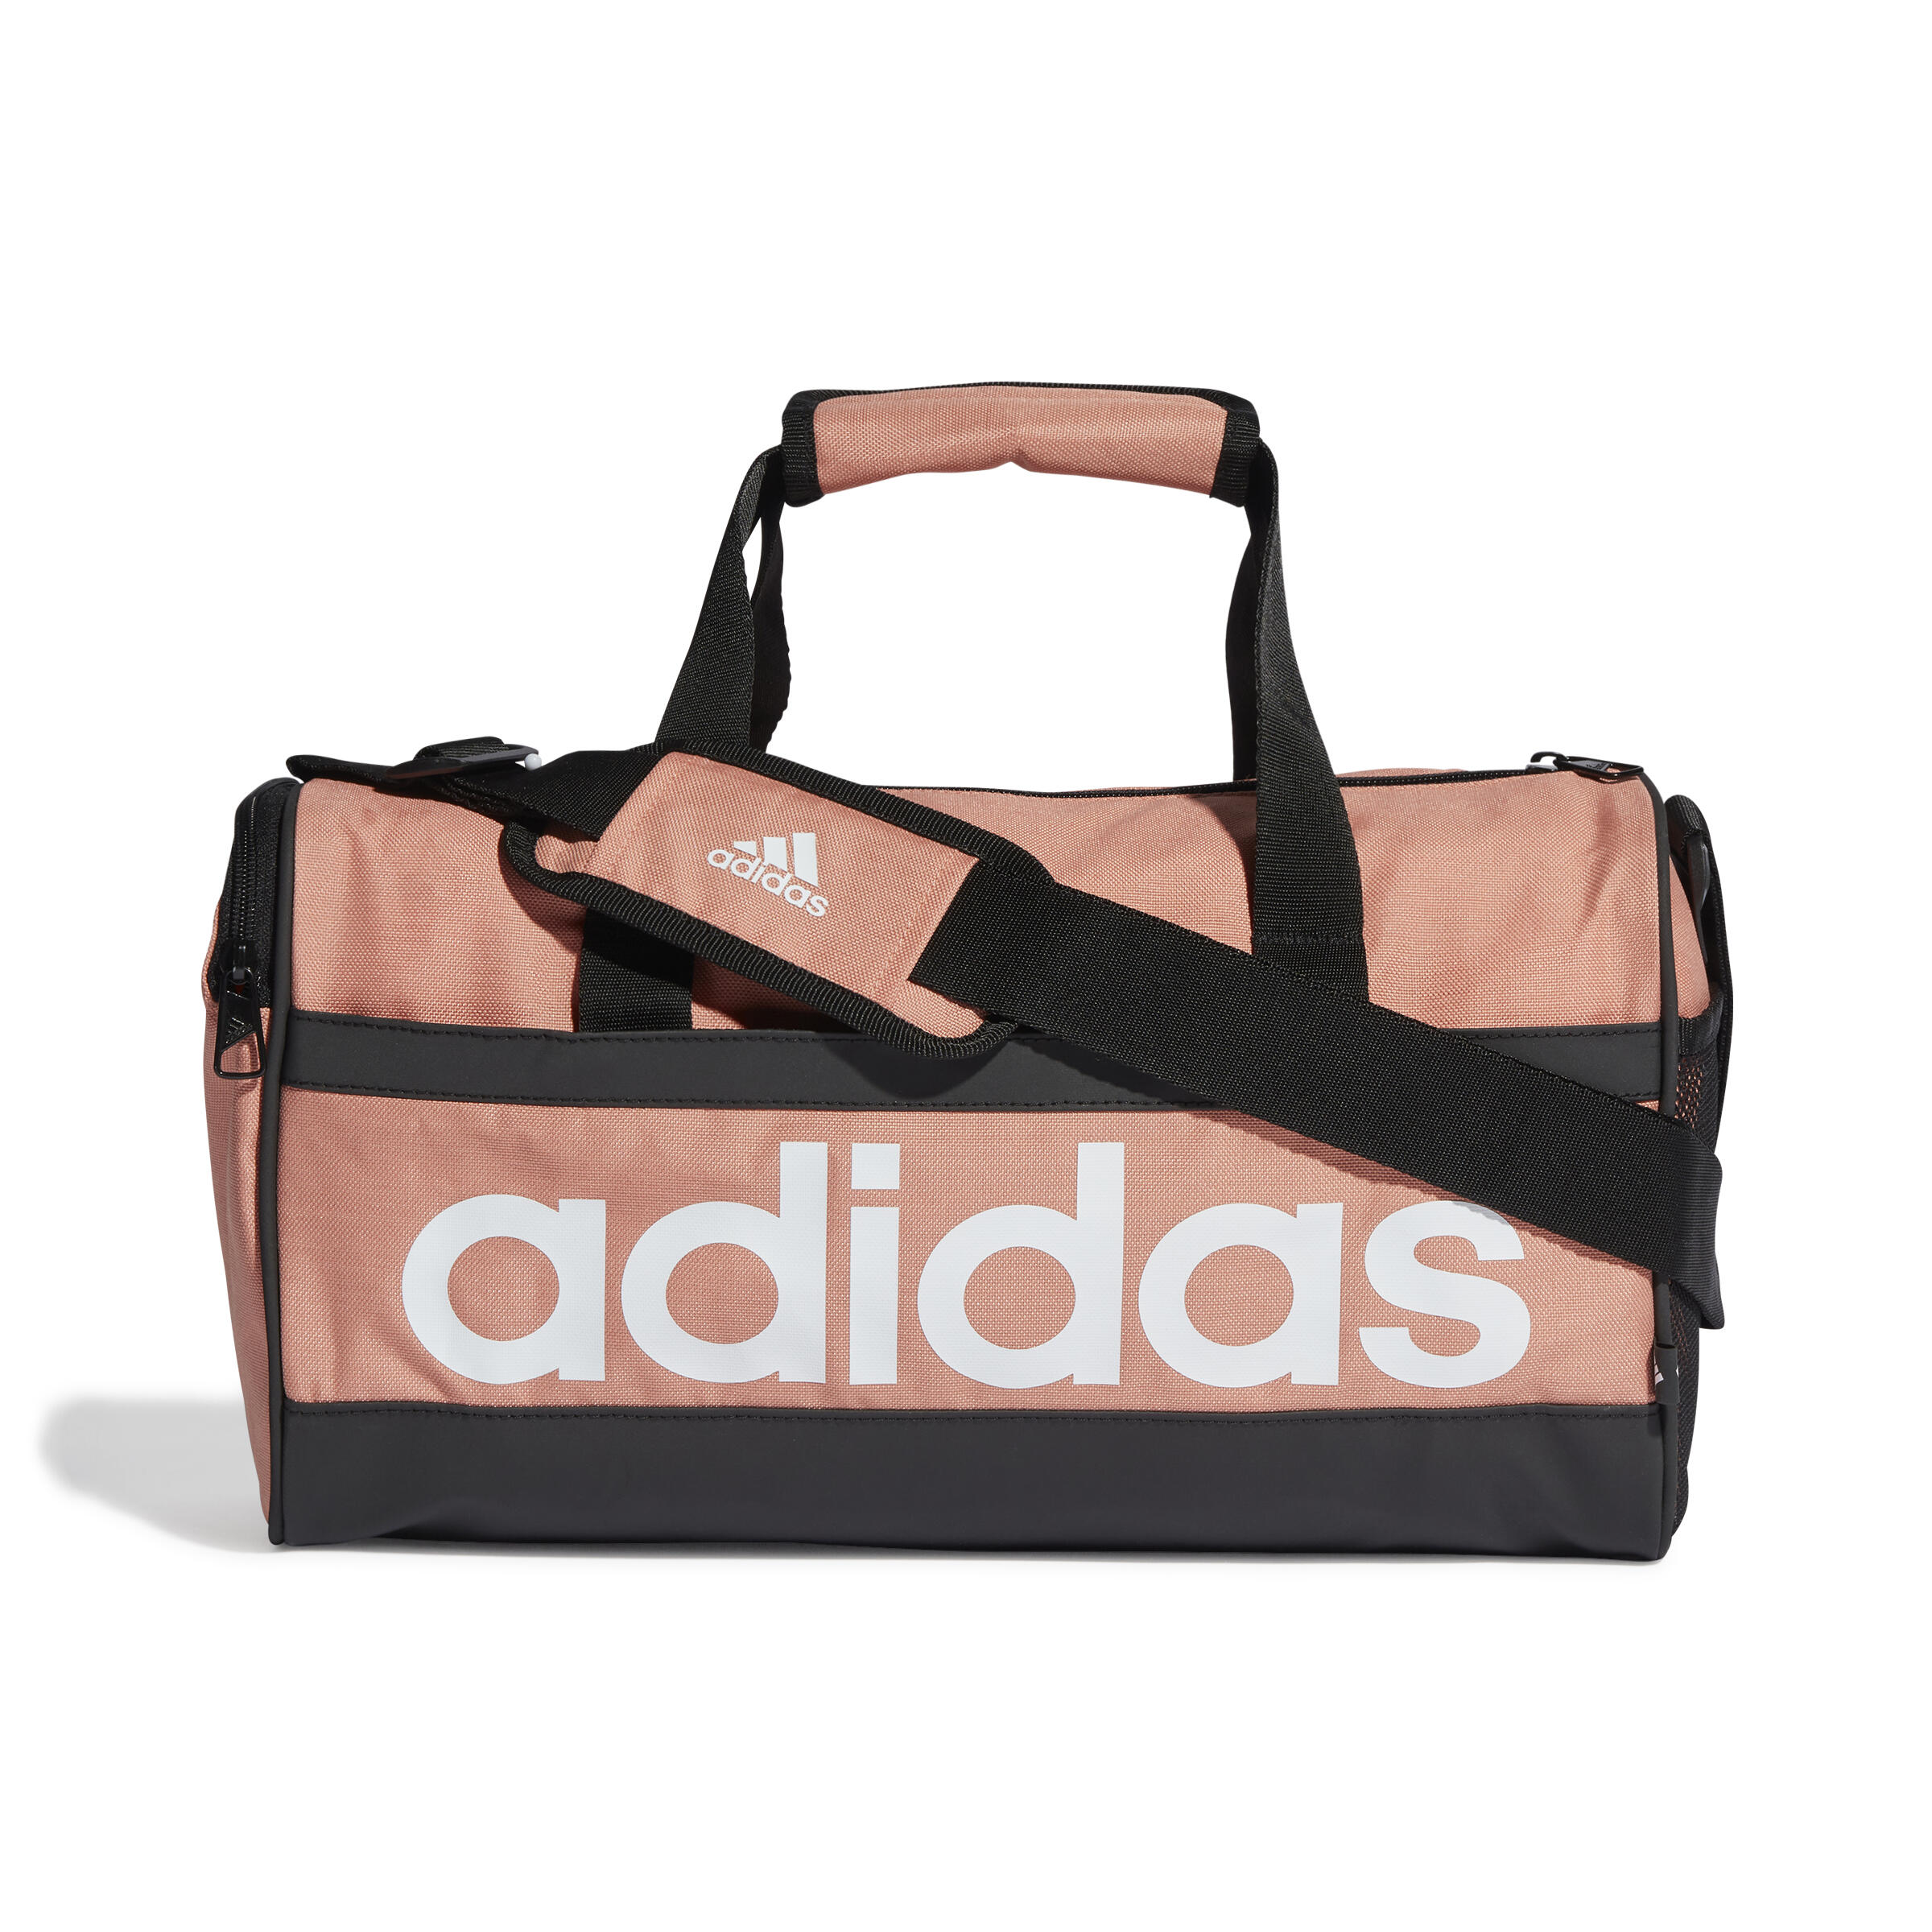 NWT ADIDAS Diablo Small Duffel Gym Bag/Travel Bag --Pick Color | eBay